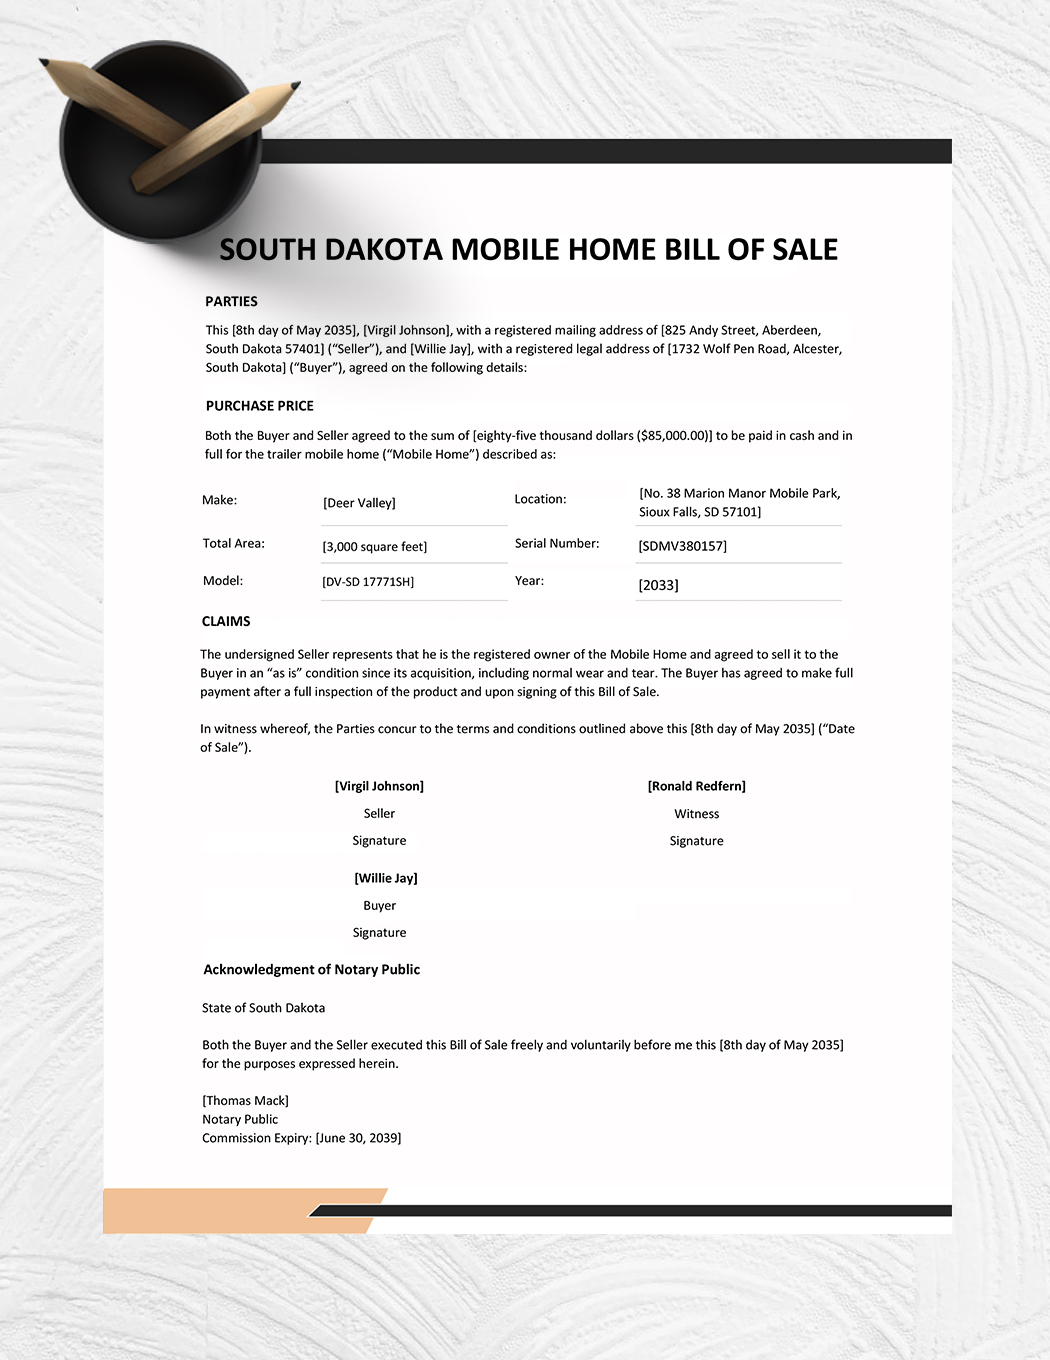 South Dakota Mobile Home Bill of Sale Template